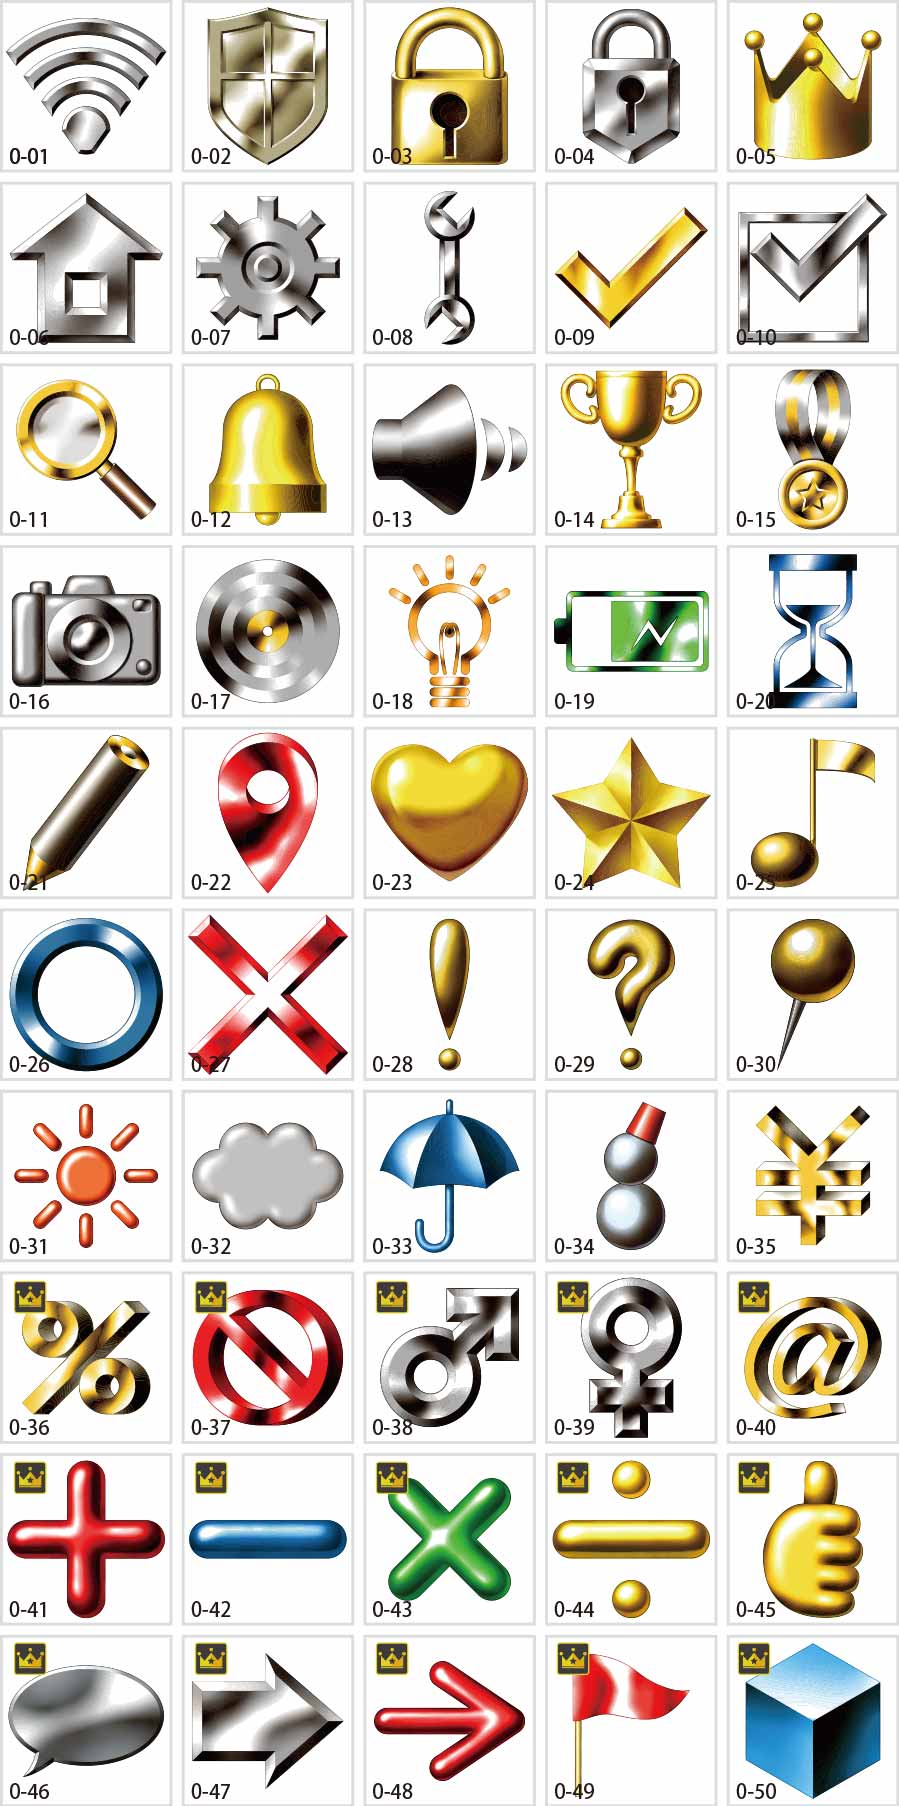 Metallic symbol icon